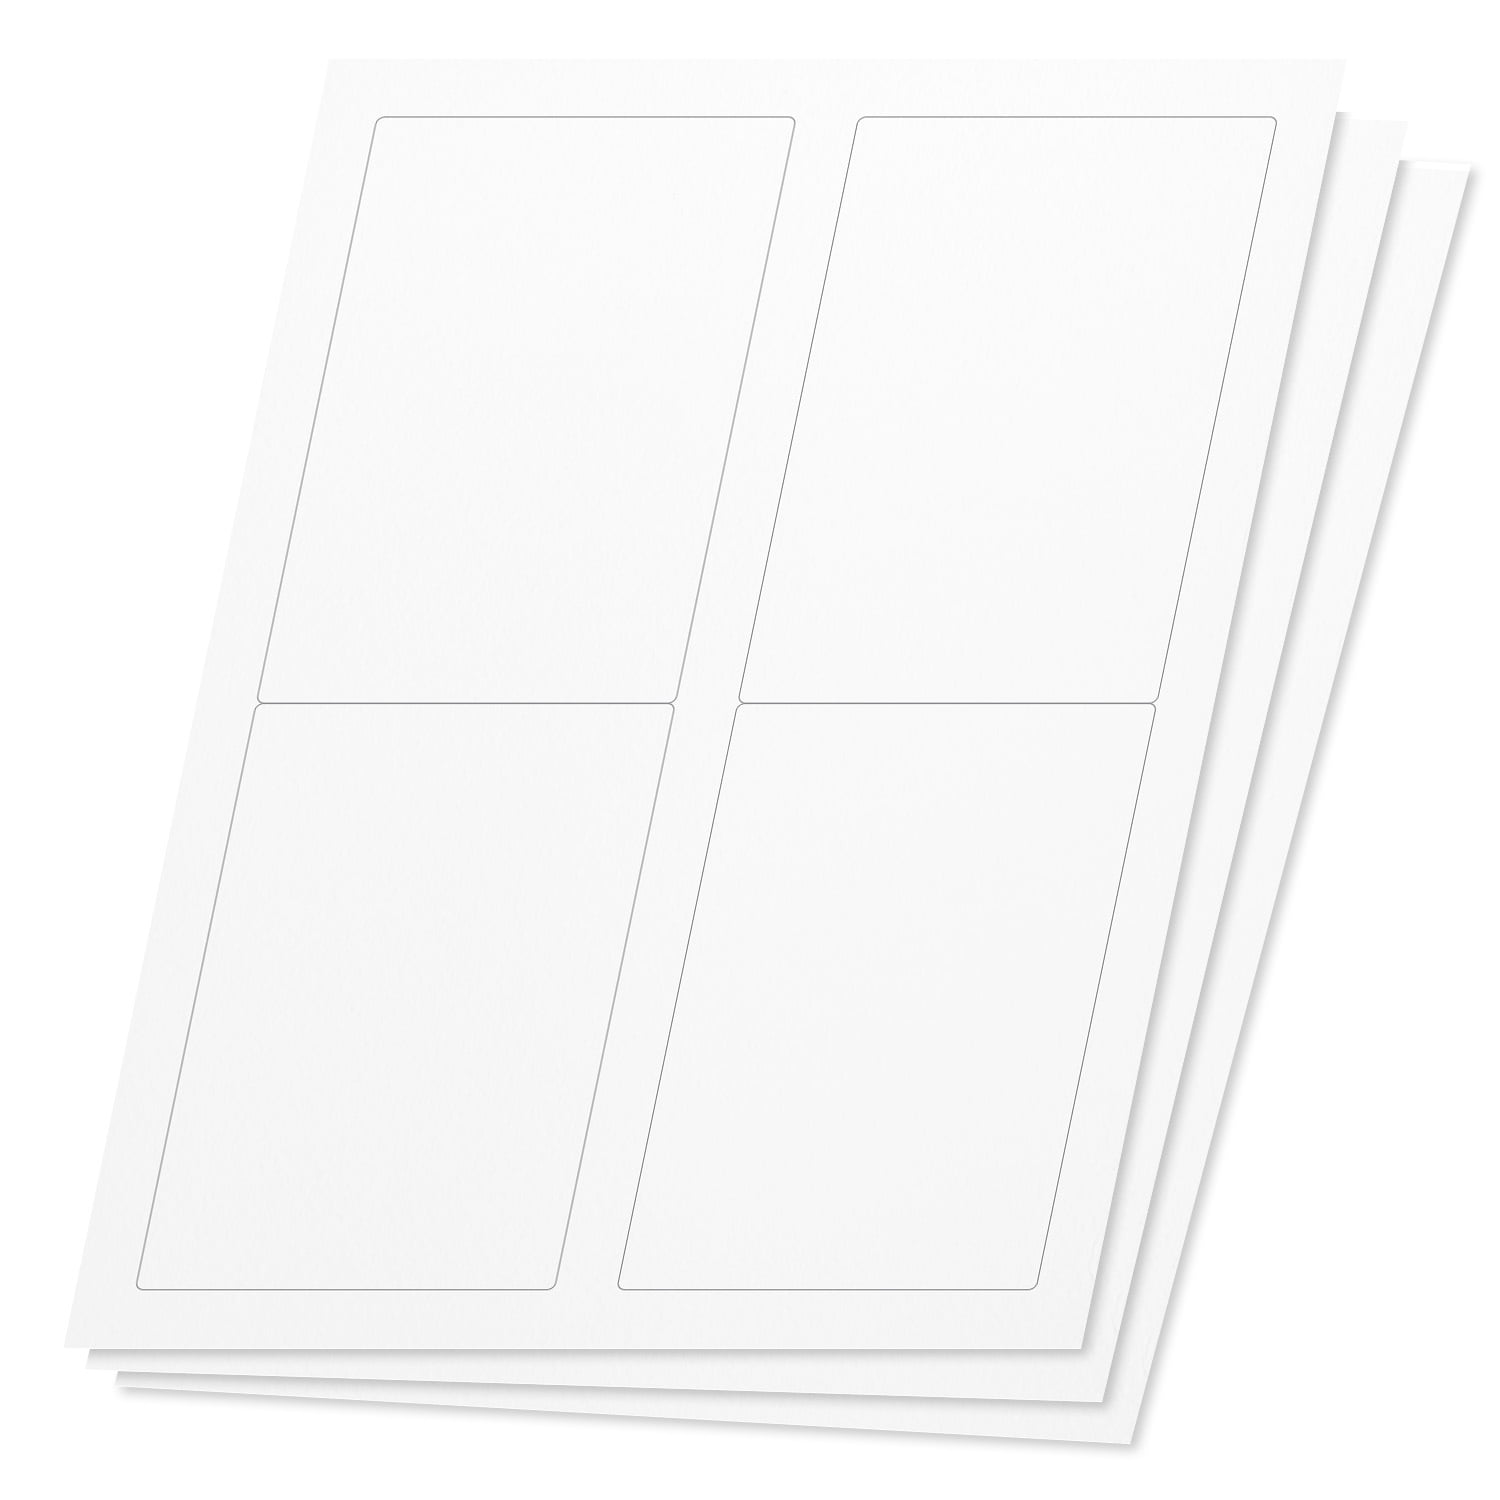 8.5 x 5.5 XL Premium Shipping Half-Sheet Self-Adhesive  PayPal Labels 150 